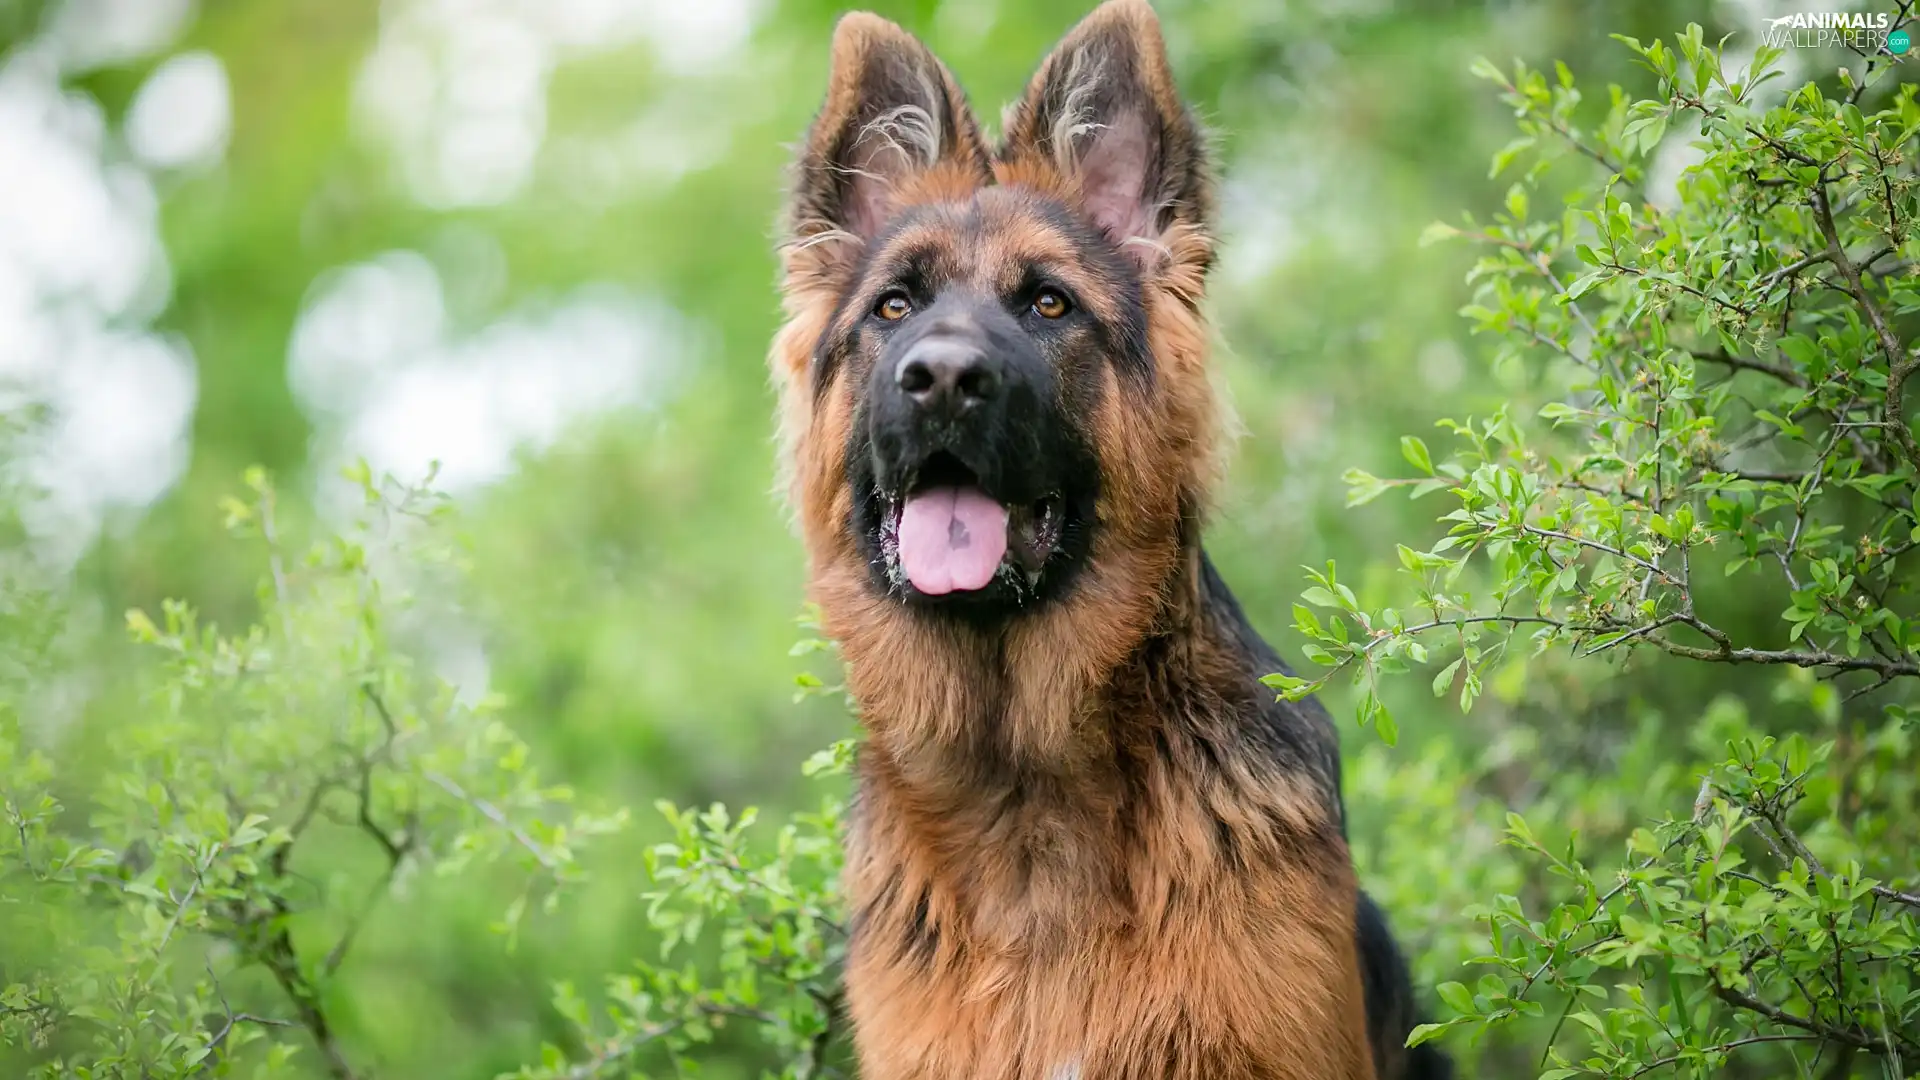 tongue, Bush, German Shepherd, muzzle, dog